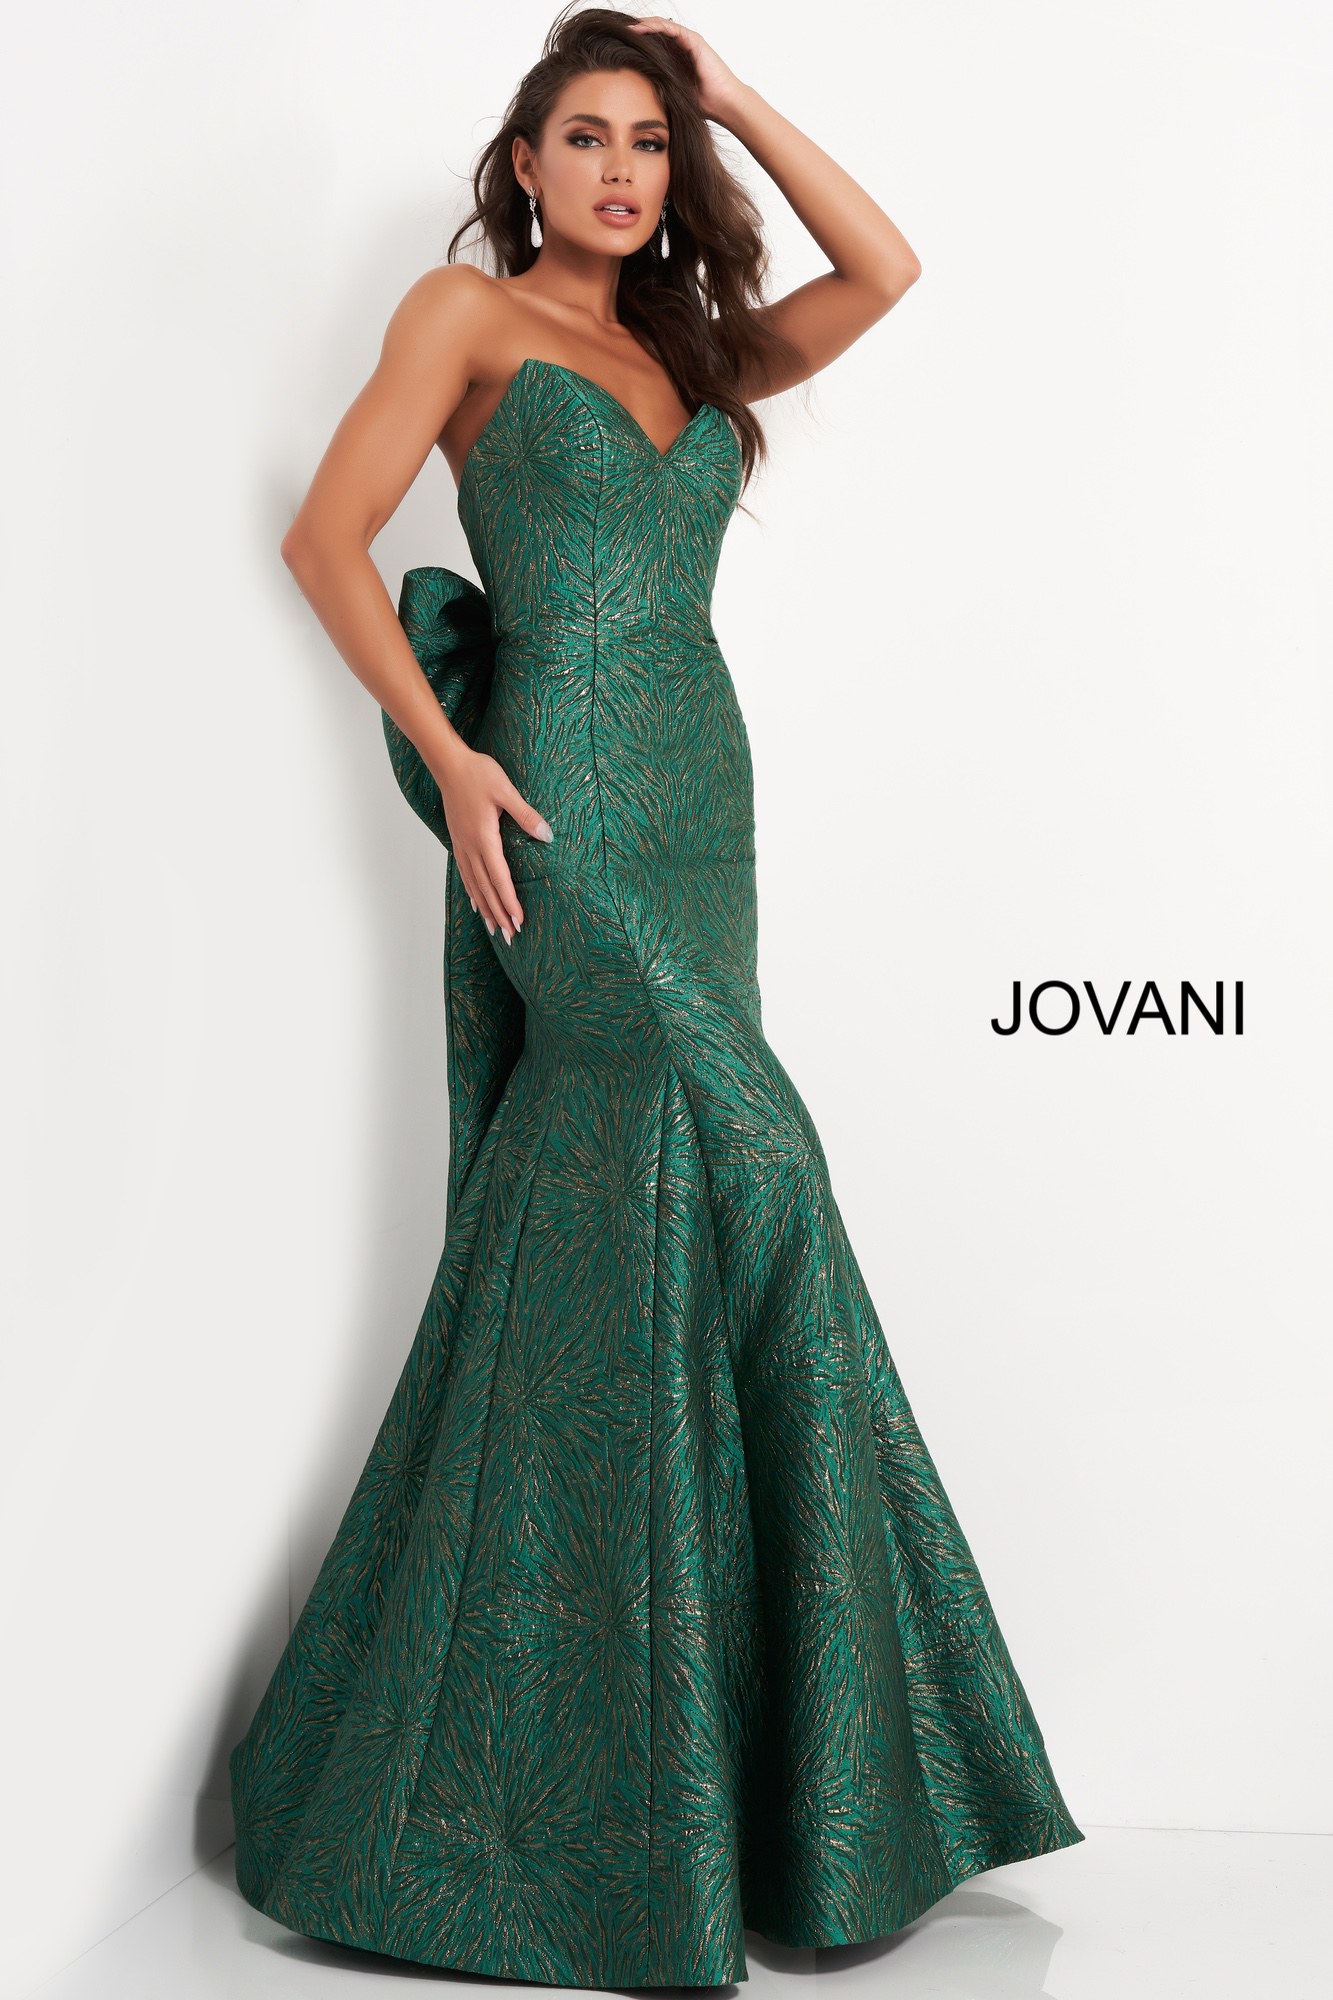 Jovani 04158 Green Strapless Mermaid Evening Gown